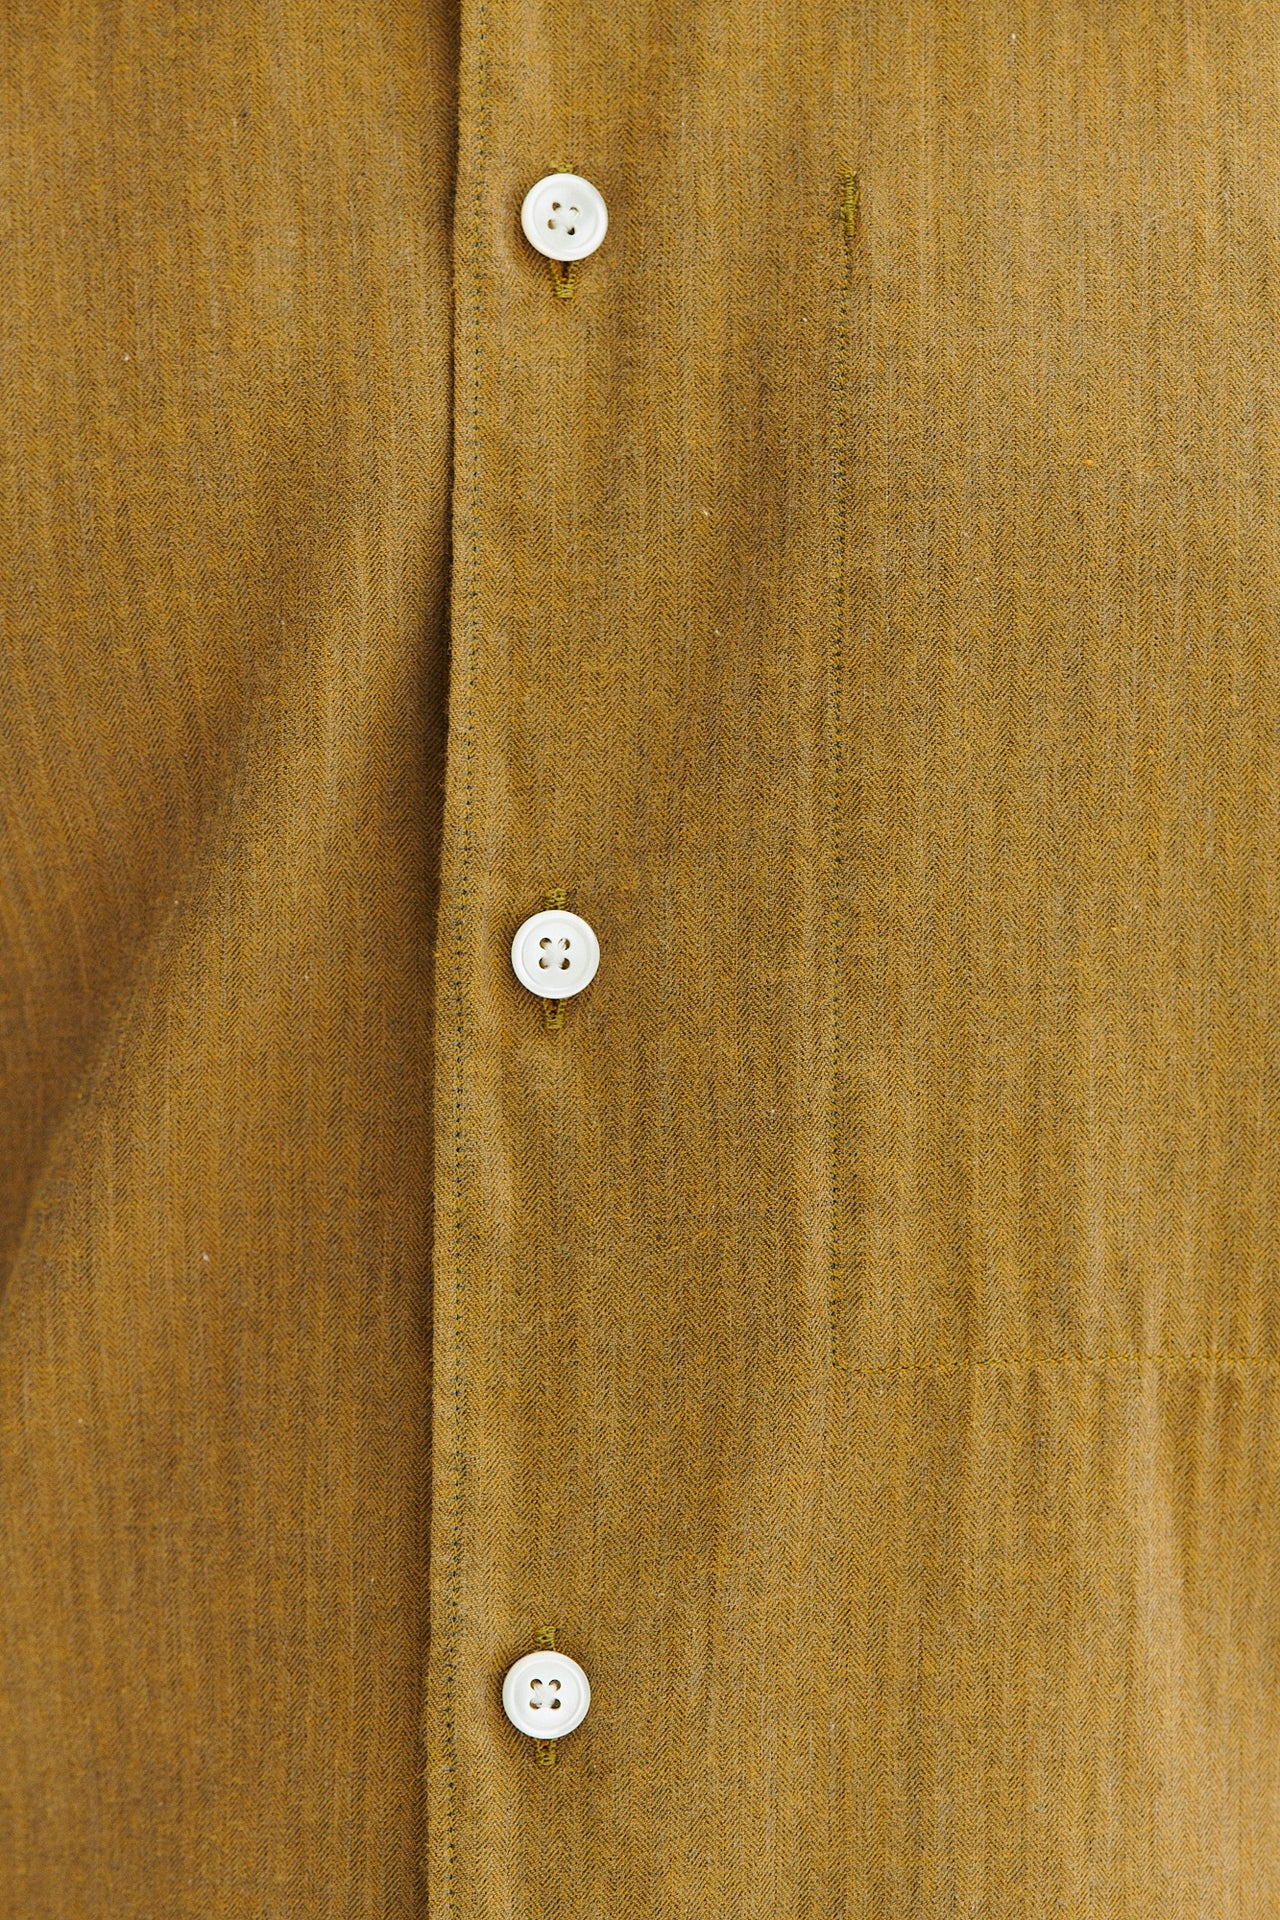 Feel Good Shirt in the Finest Ochre Yellow Fine Herringbone Soft Italian Giza 87 Cotton Flannelw